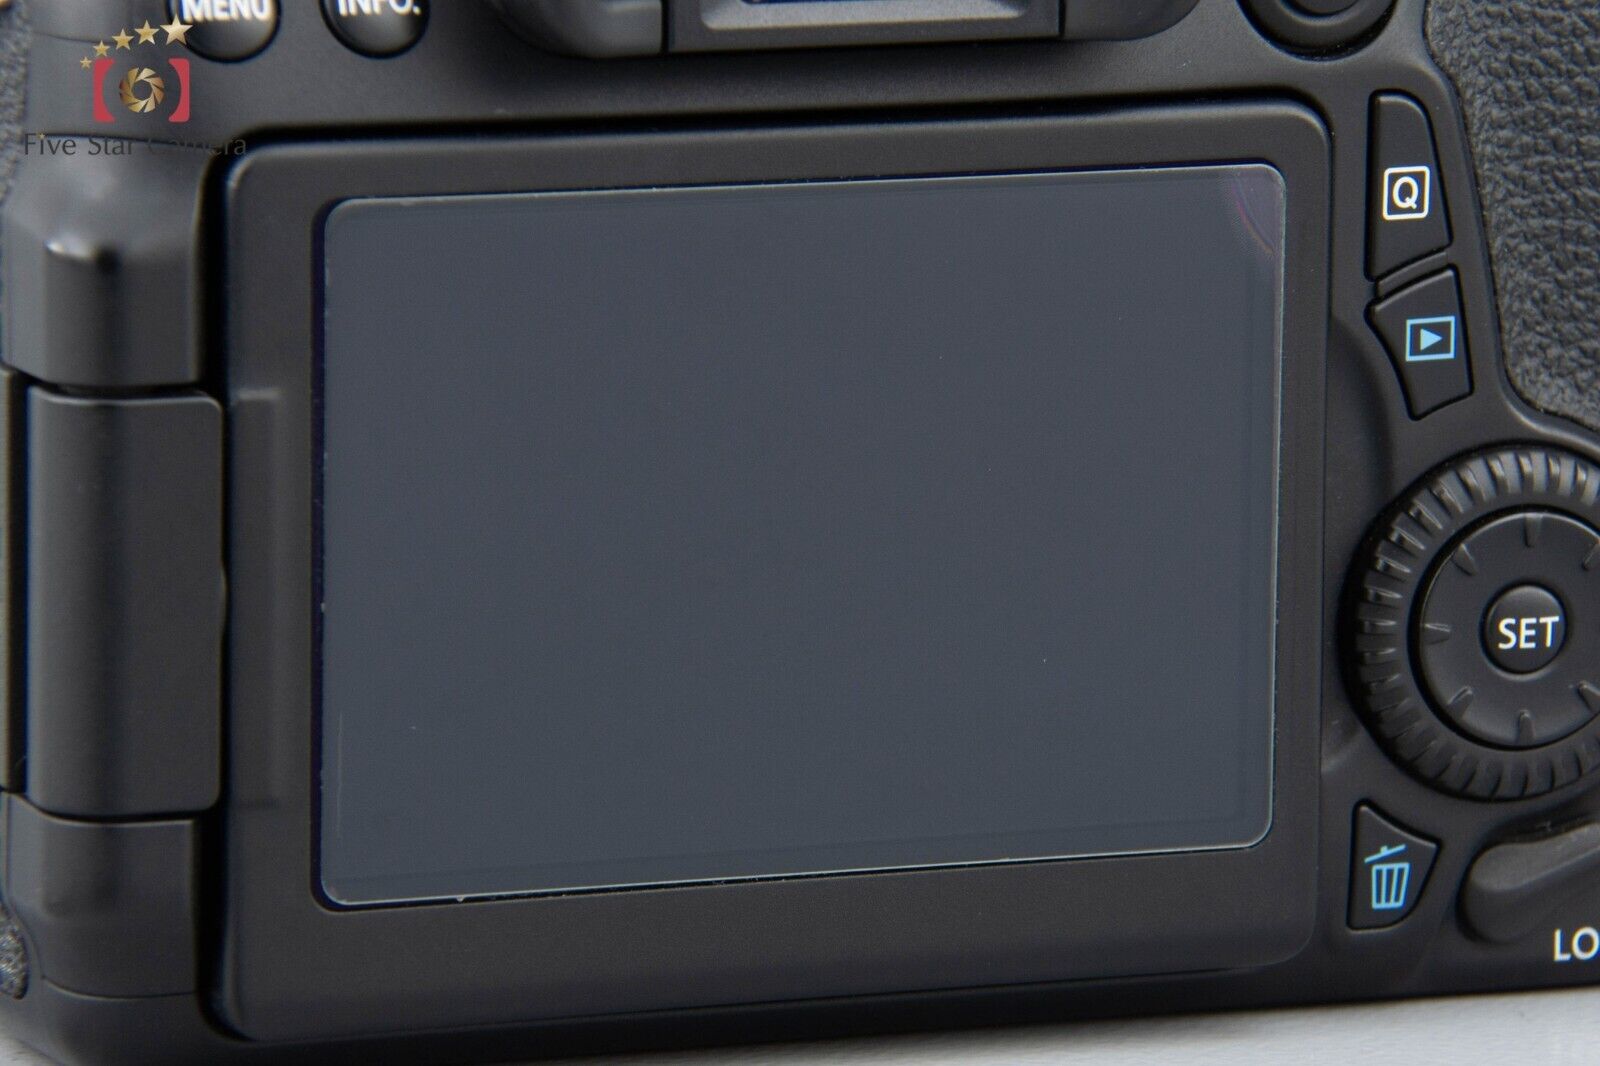 Canon EOS 70D 20.2 MP DSLR EF-S 18-55 55-250 Lenses